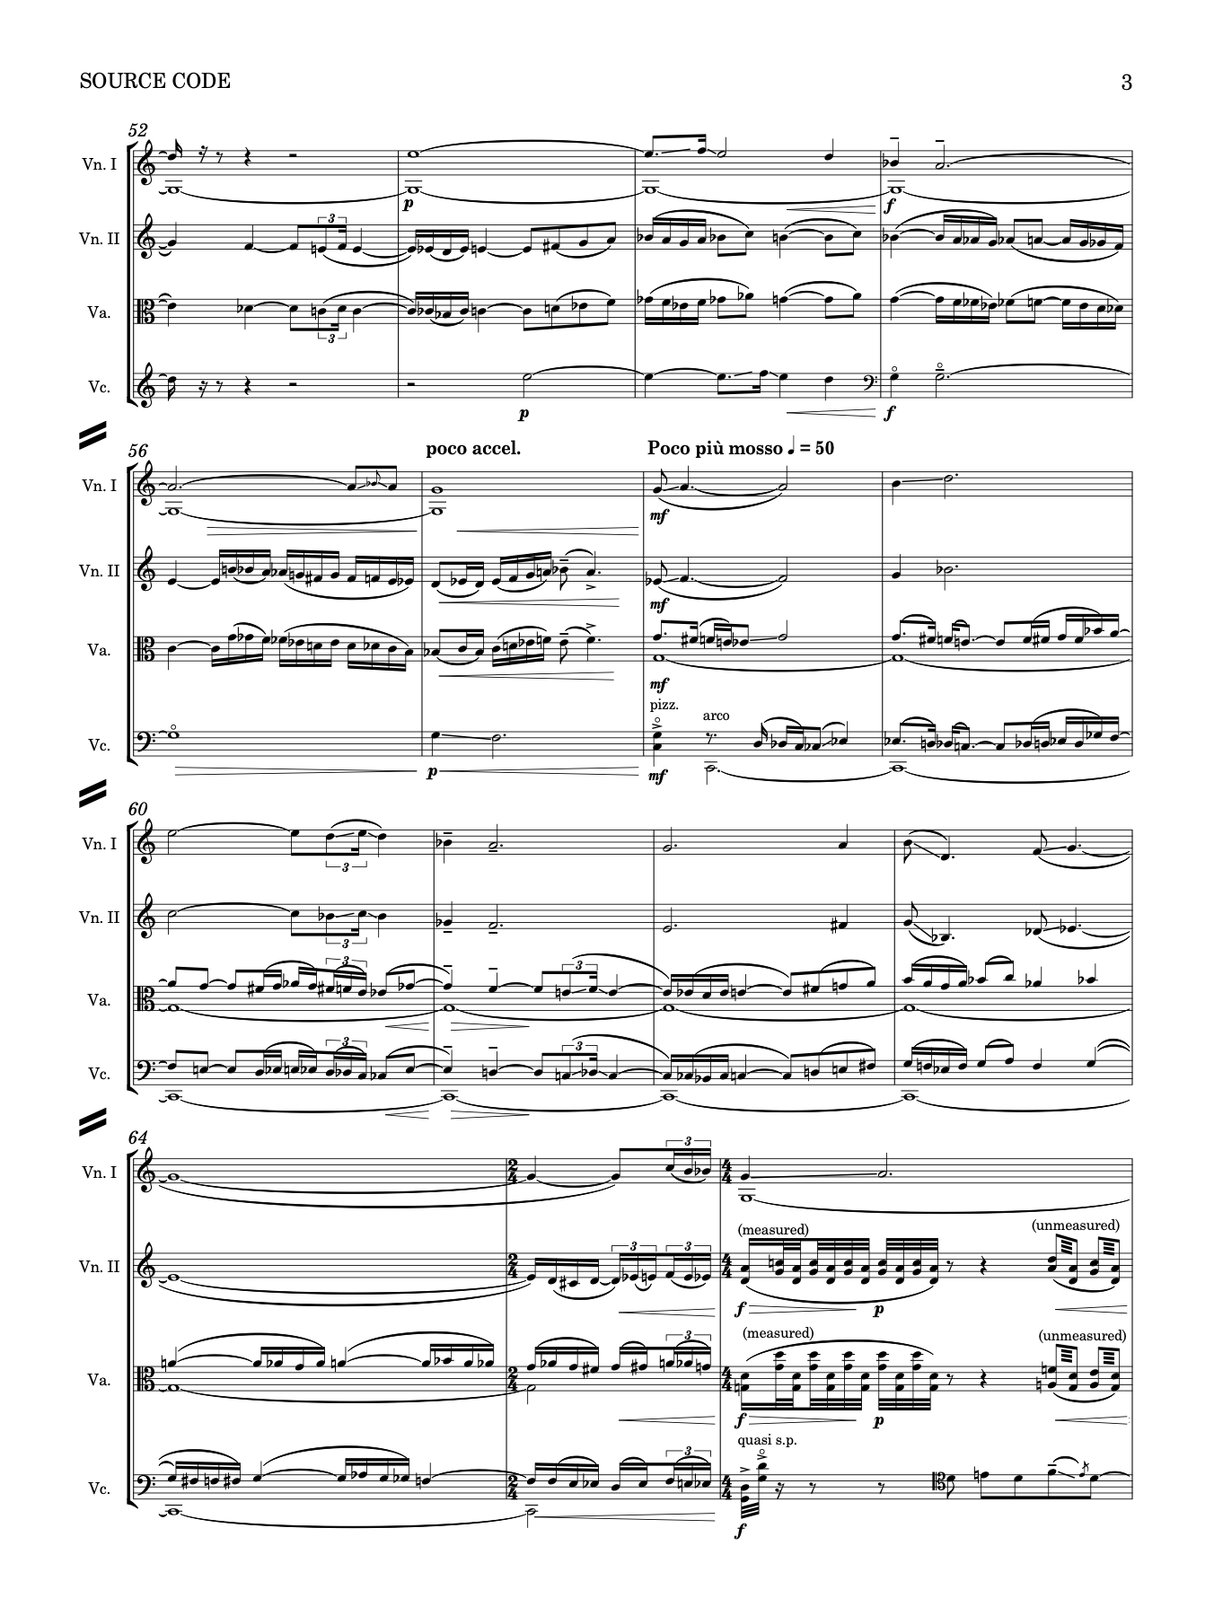 Montgomery: Source Code - Version for String Quartet